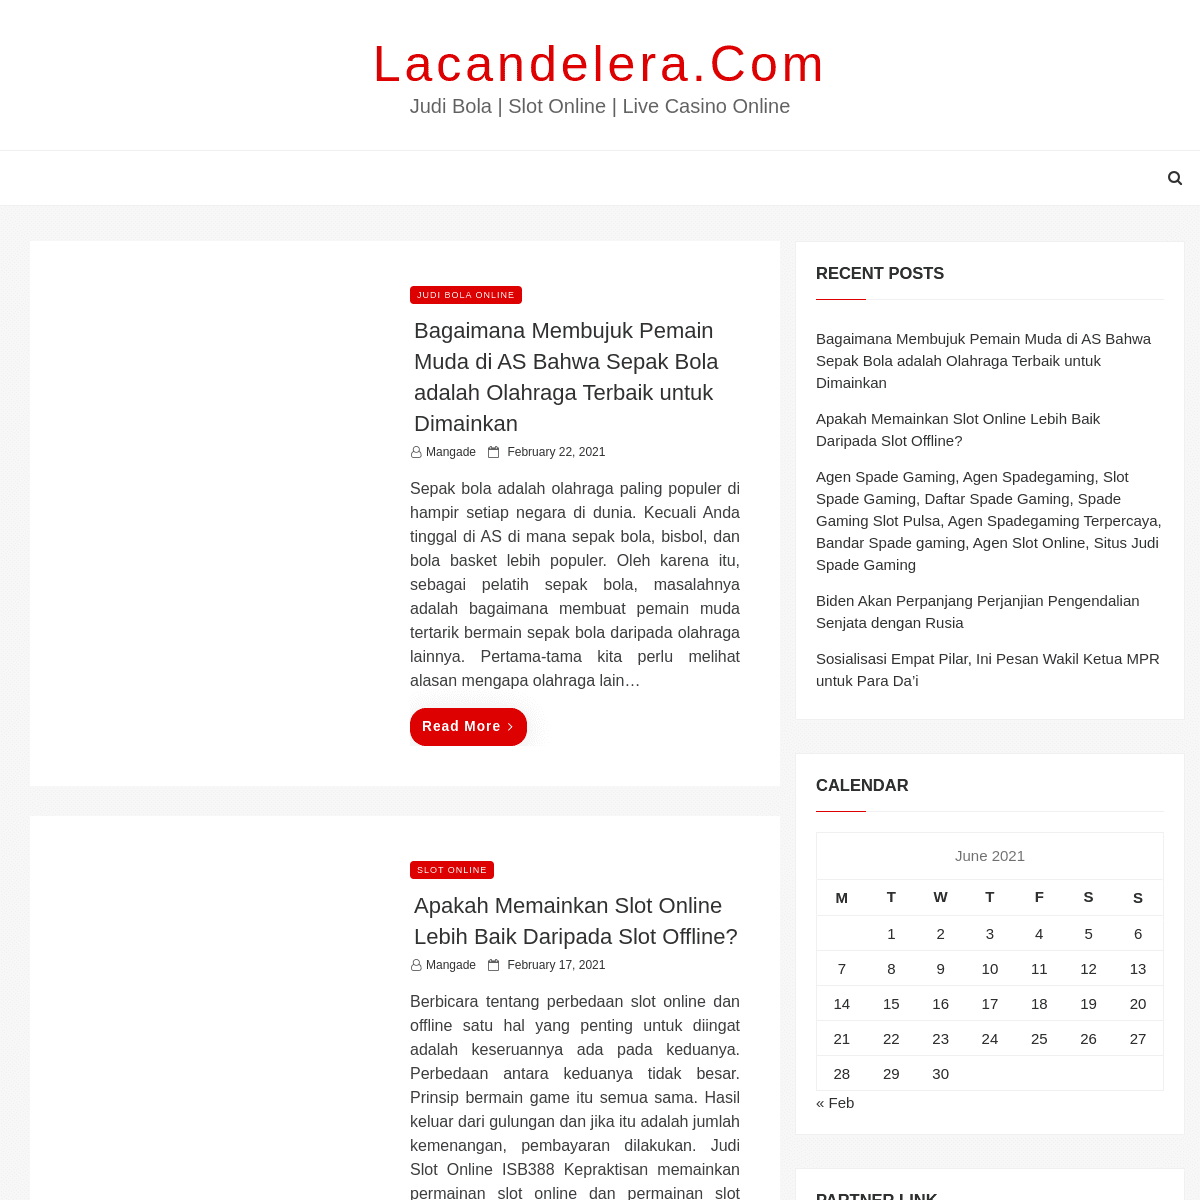 A complete backup of https://lacandelera.com